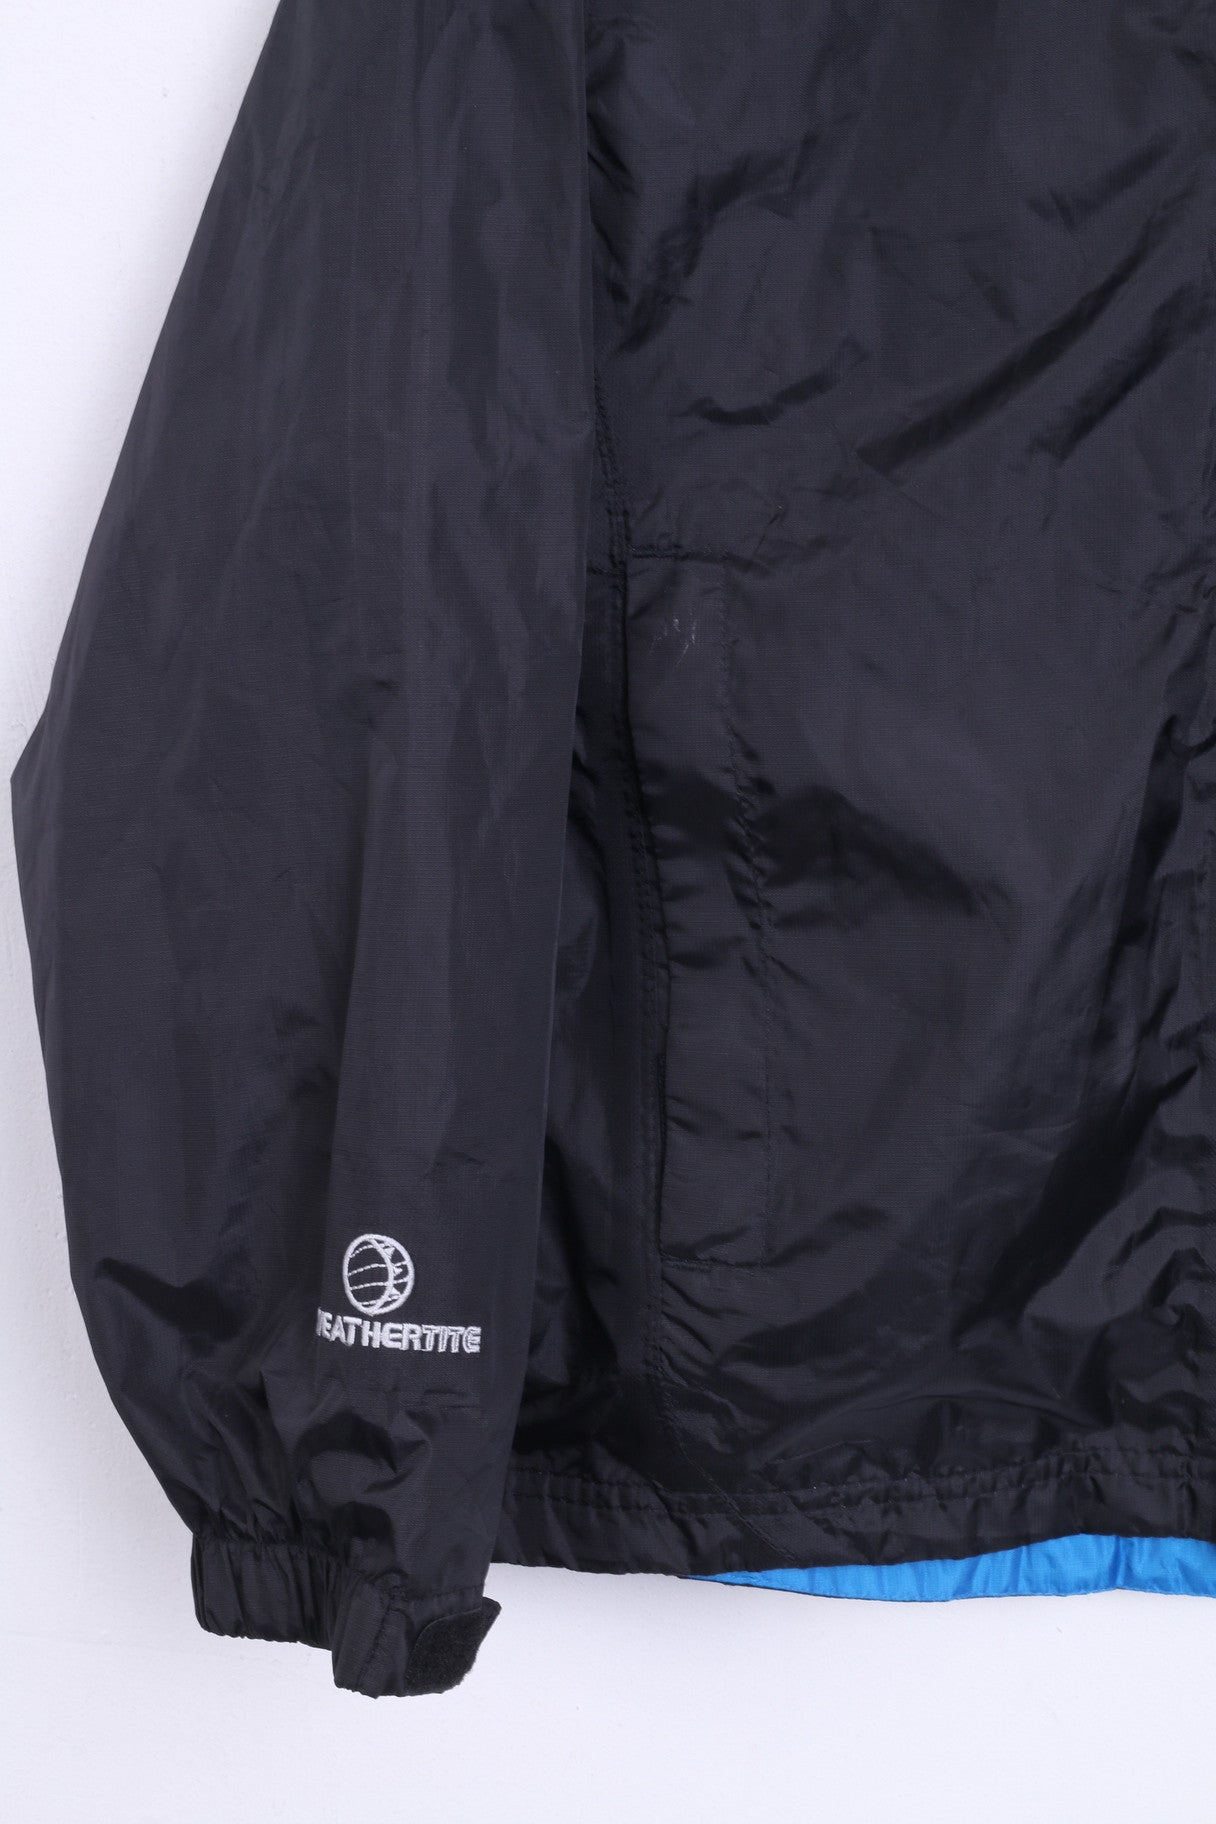 Karrimor Boys 11-12Yrs Jacket Black Hood Muntain Company - RetrospectClothes